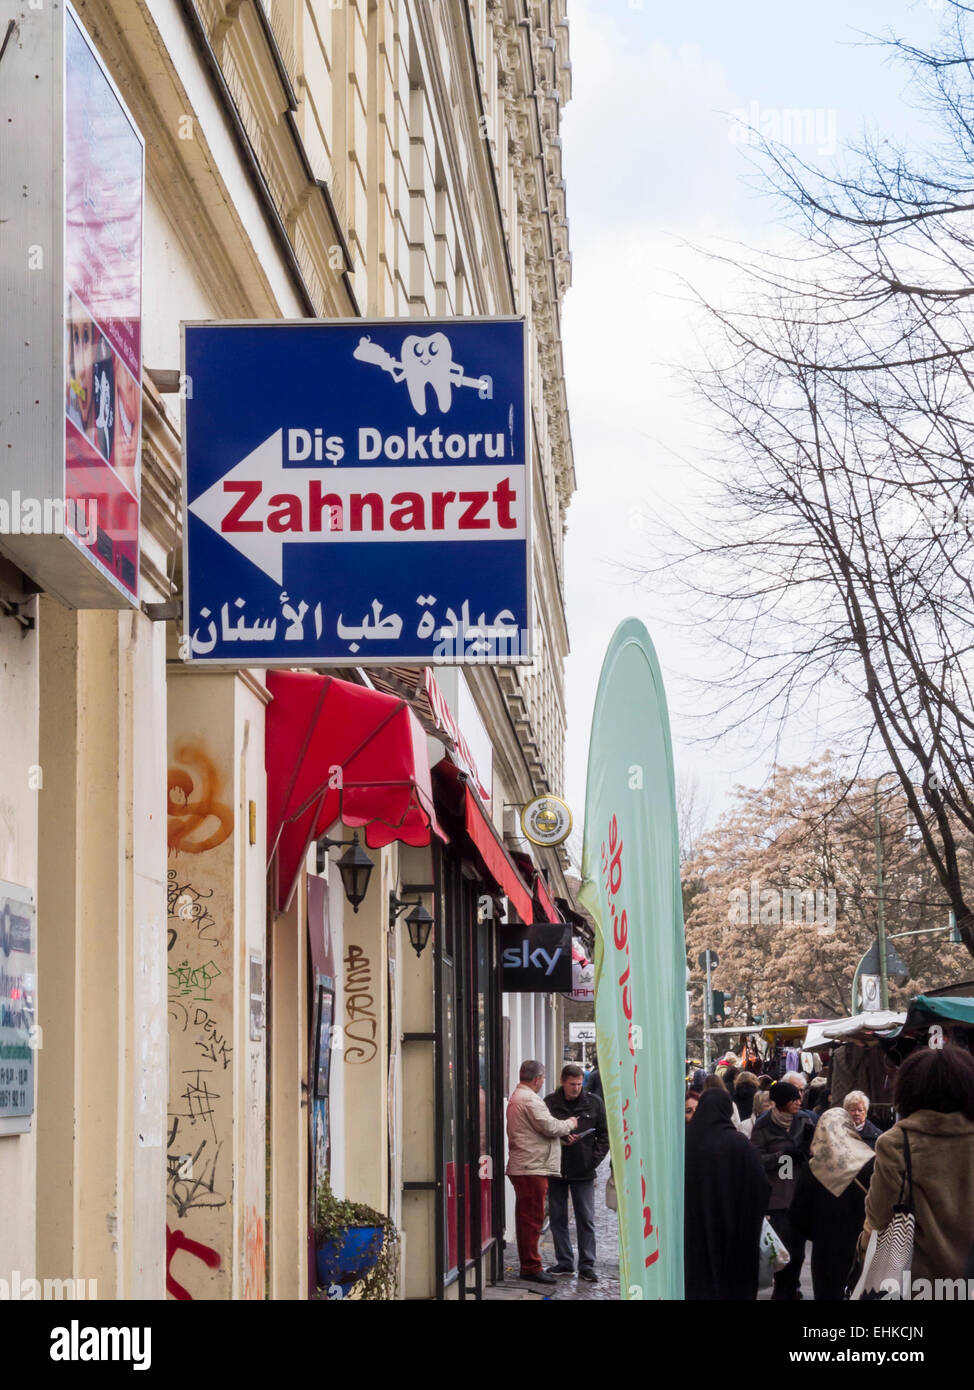 Dentist, Dental practice, Zahnarzt sign  Maybachufer, Berlin Stock Photo